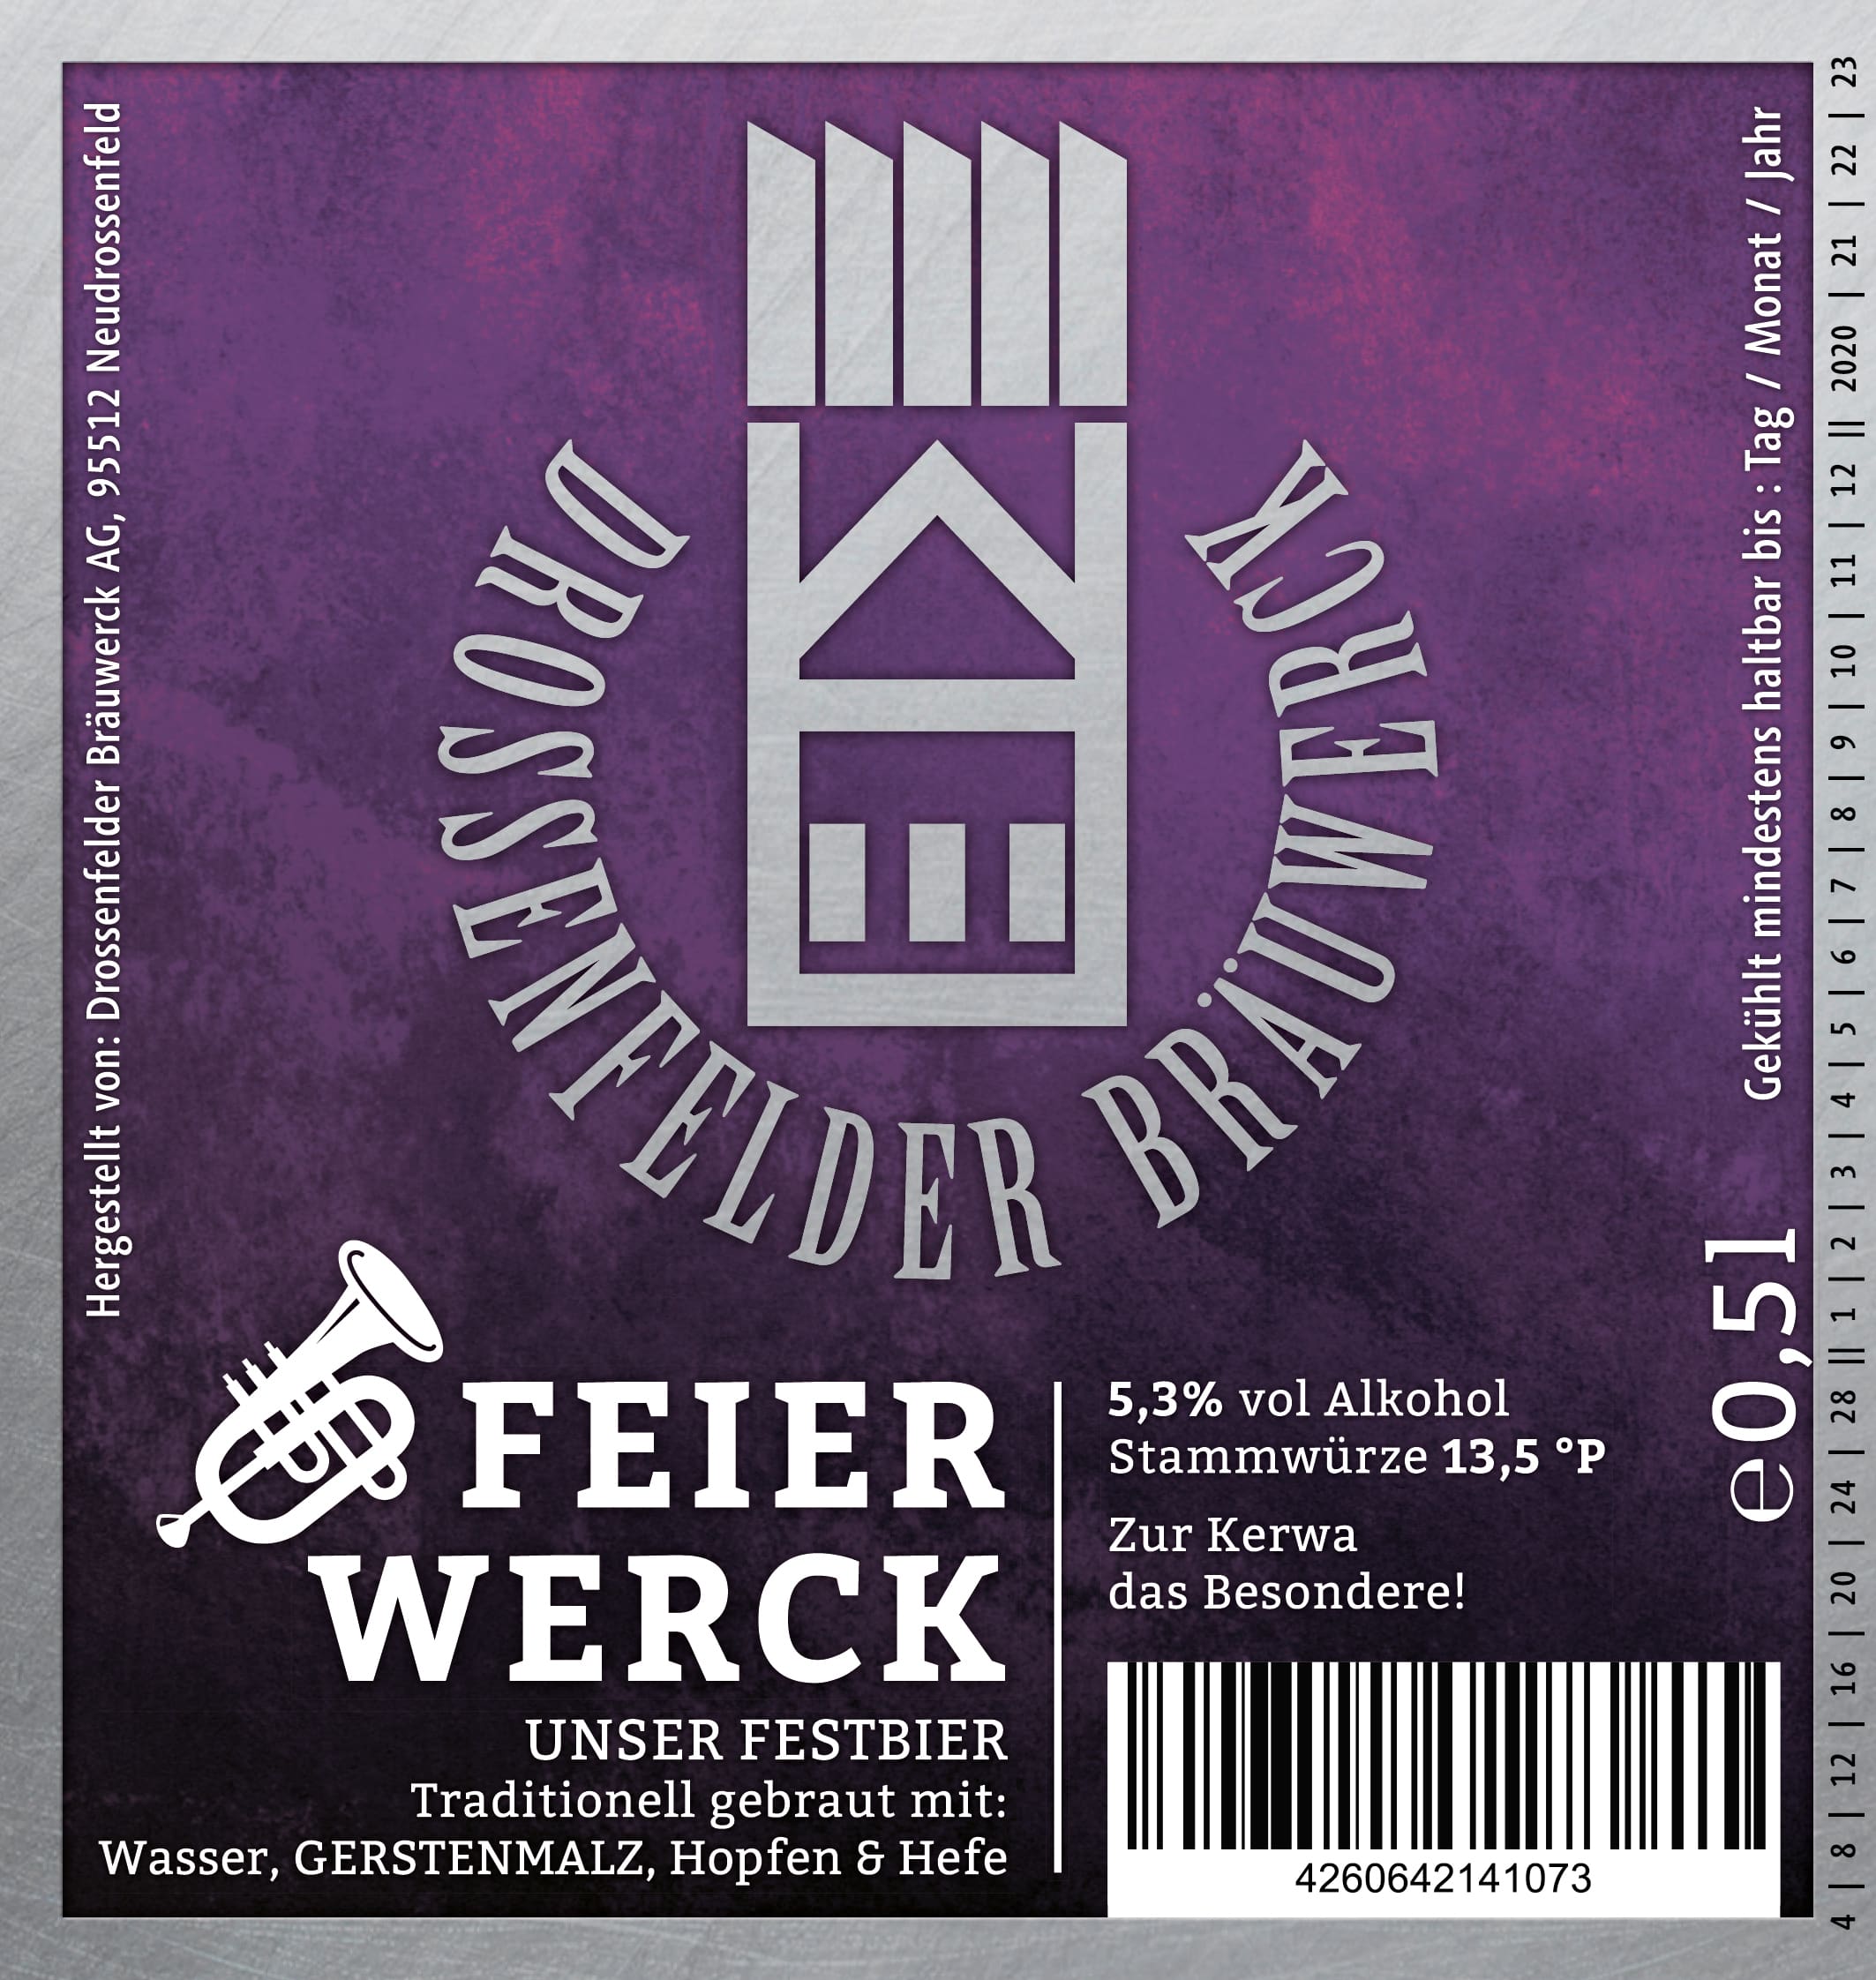 Etikett Feierwerck - Drossenfelder Bräuwerck AG - Gaststätte, Biergarten und Brauerei in Neudrossenfeld